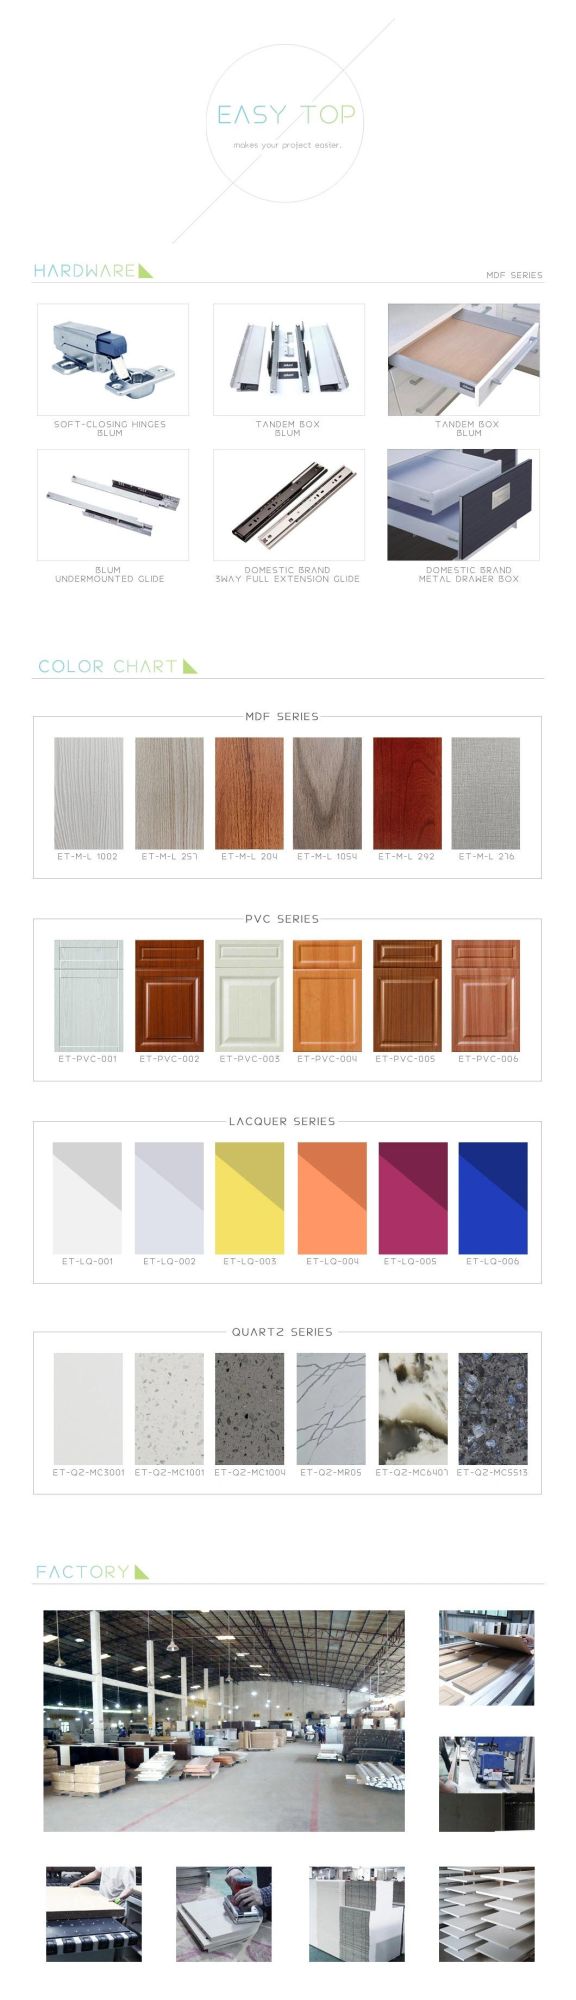 European Hot Sale Custom Design HPL Laminate Furniture Kitchen Set Cabinet